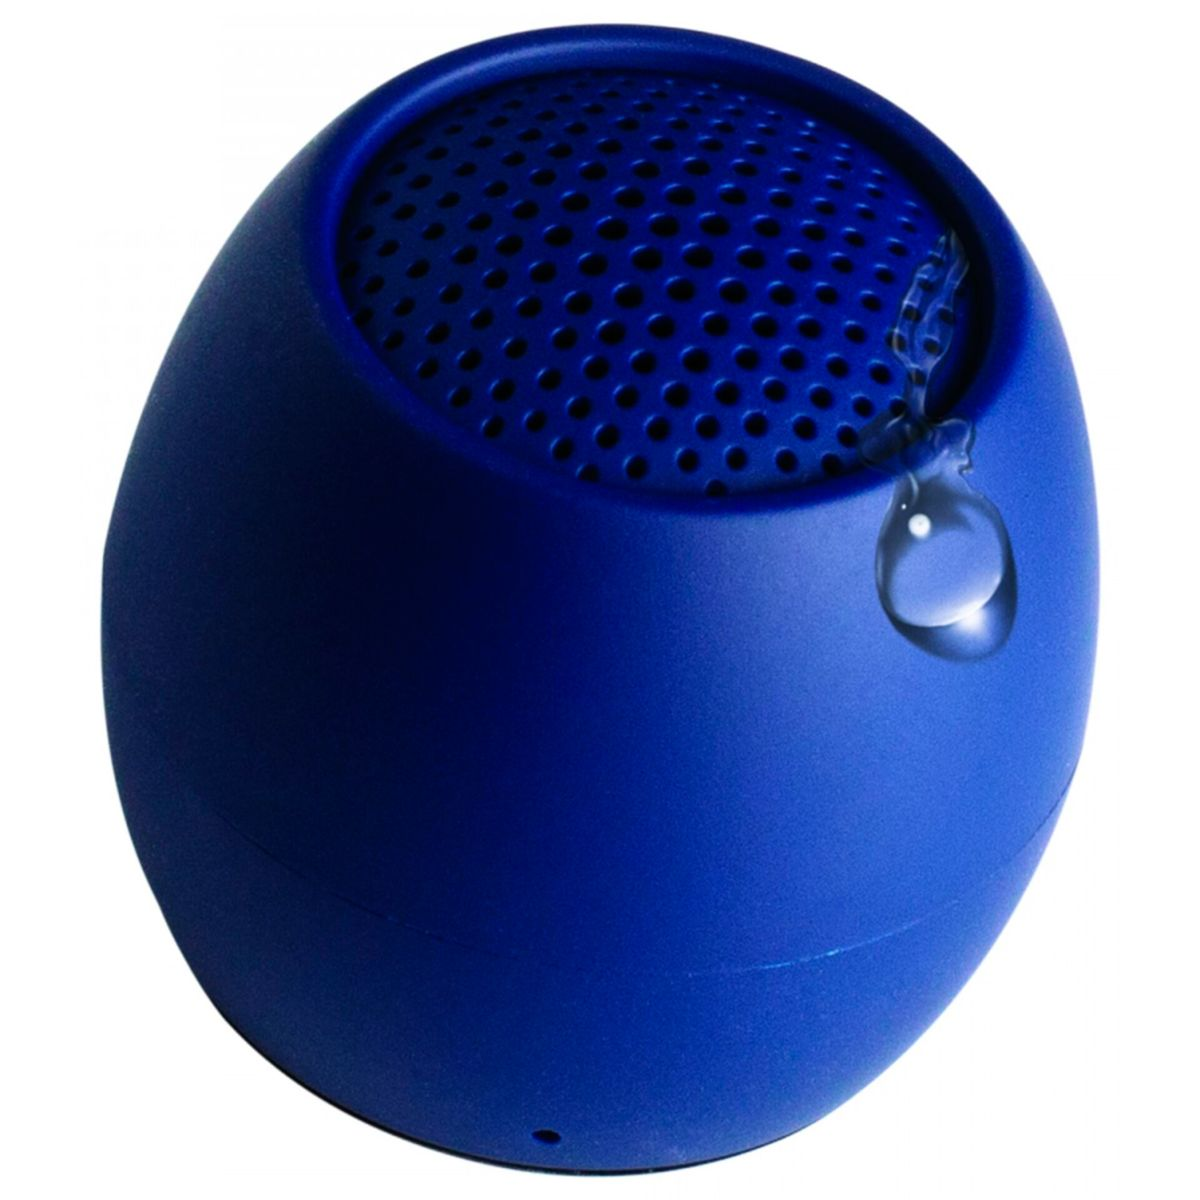 BOOMPODS Blue Zero Navy blau Bluetooth-Lautsprecher,